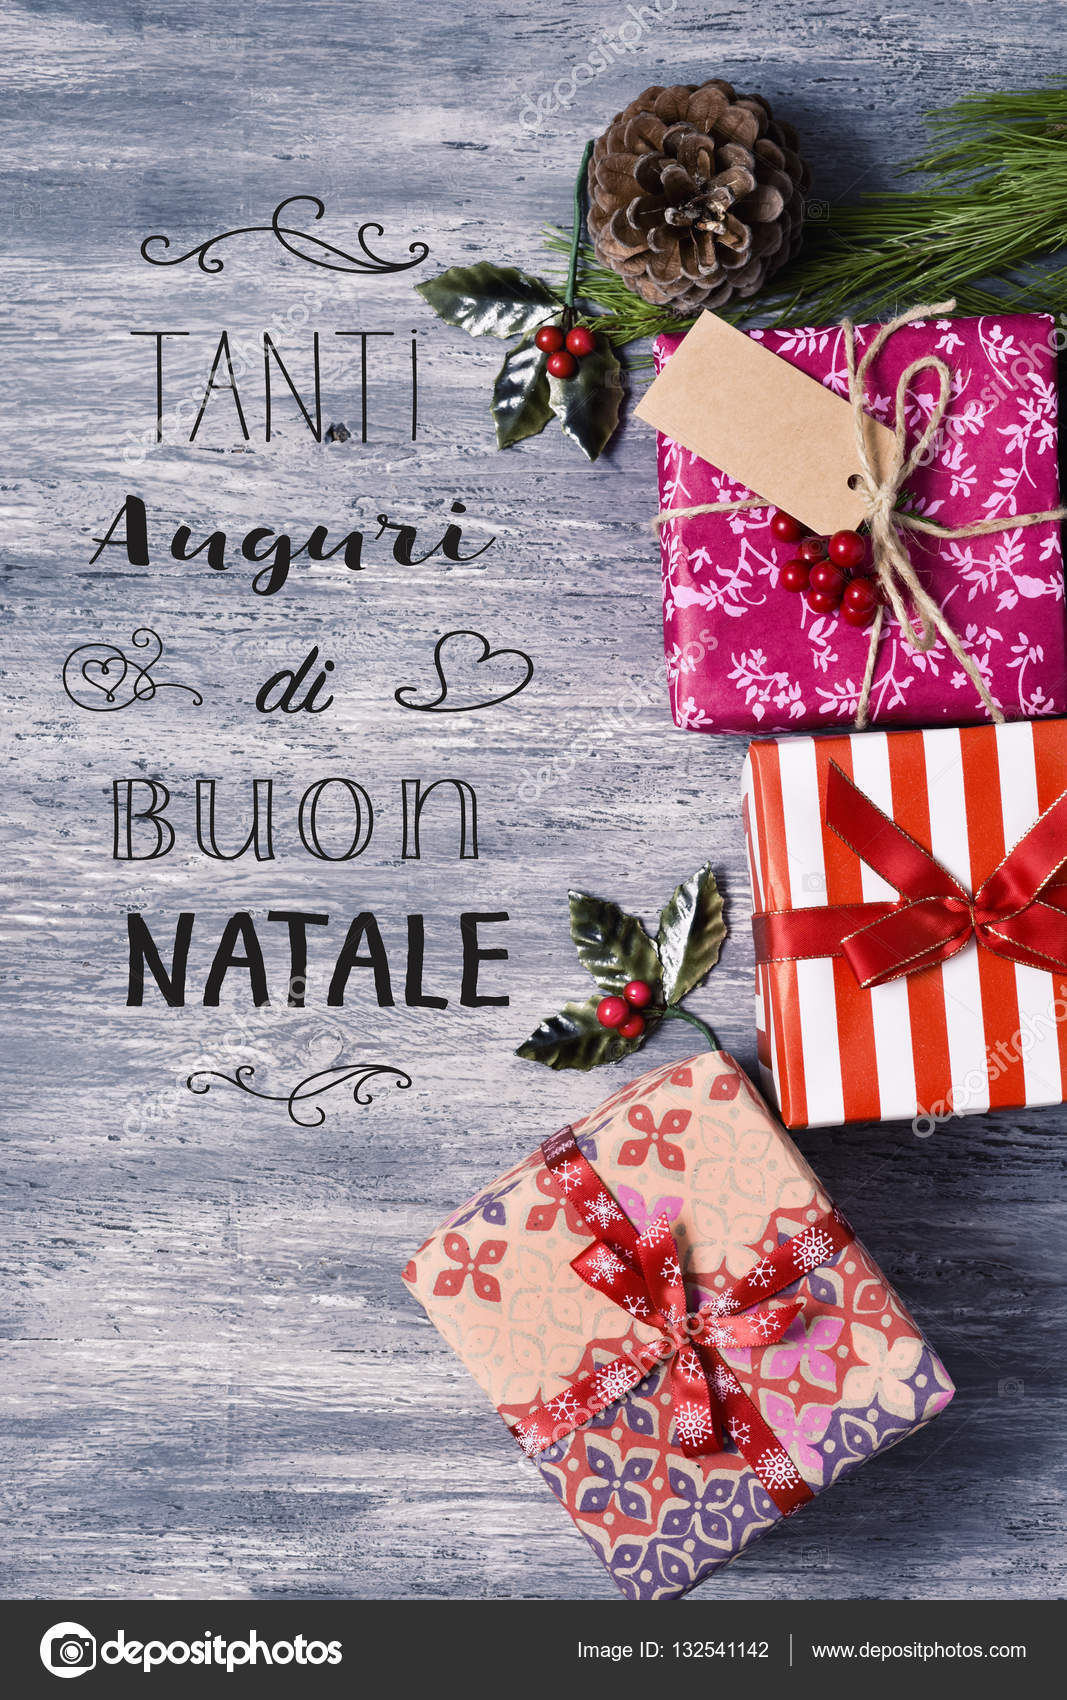 Auguri Di Buon Natale Merry Christmas.Text Tanti Auguri Di Buon Natale Merry Christmas In Italian Stock Photo C Nito103 132541142